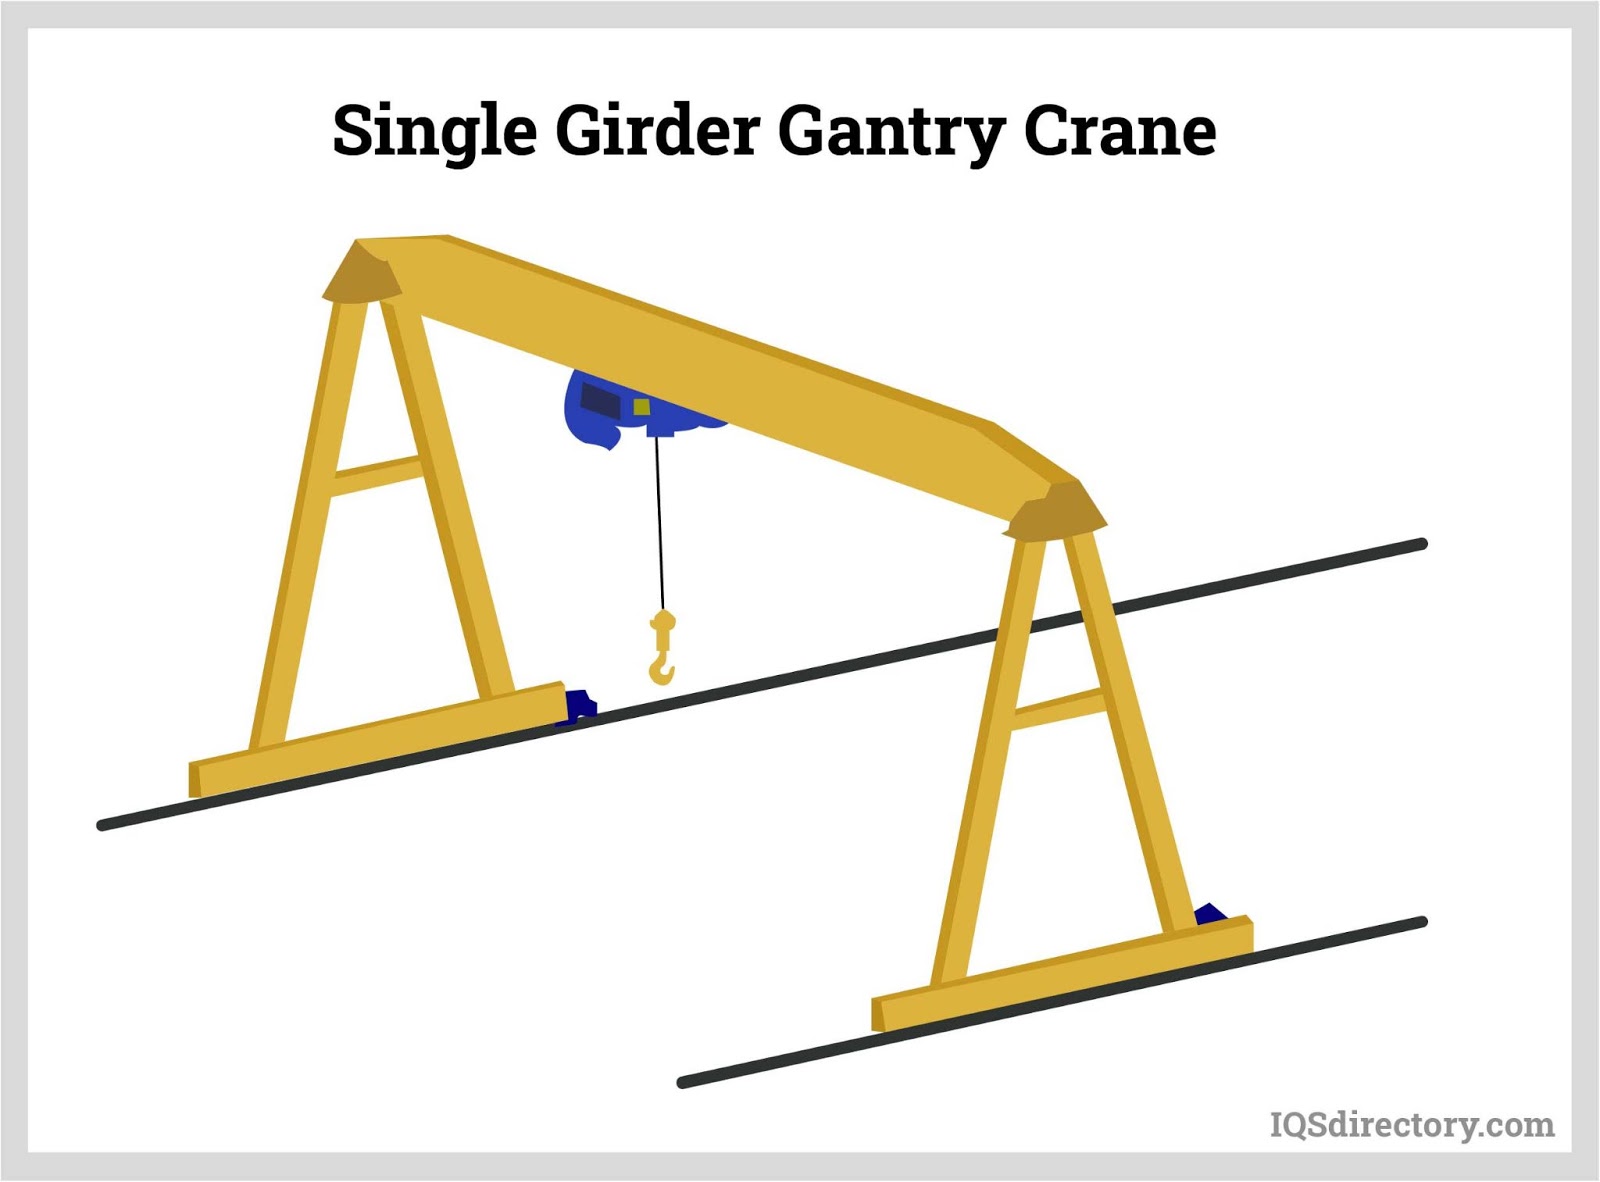 Single Girder Gantry Crane